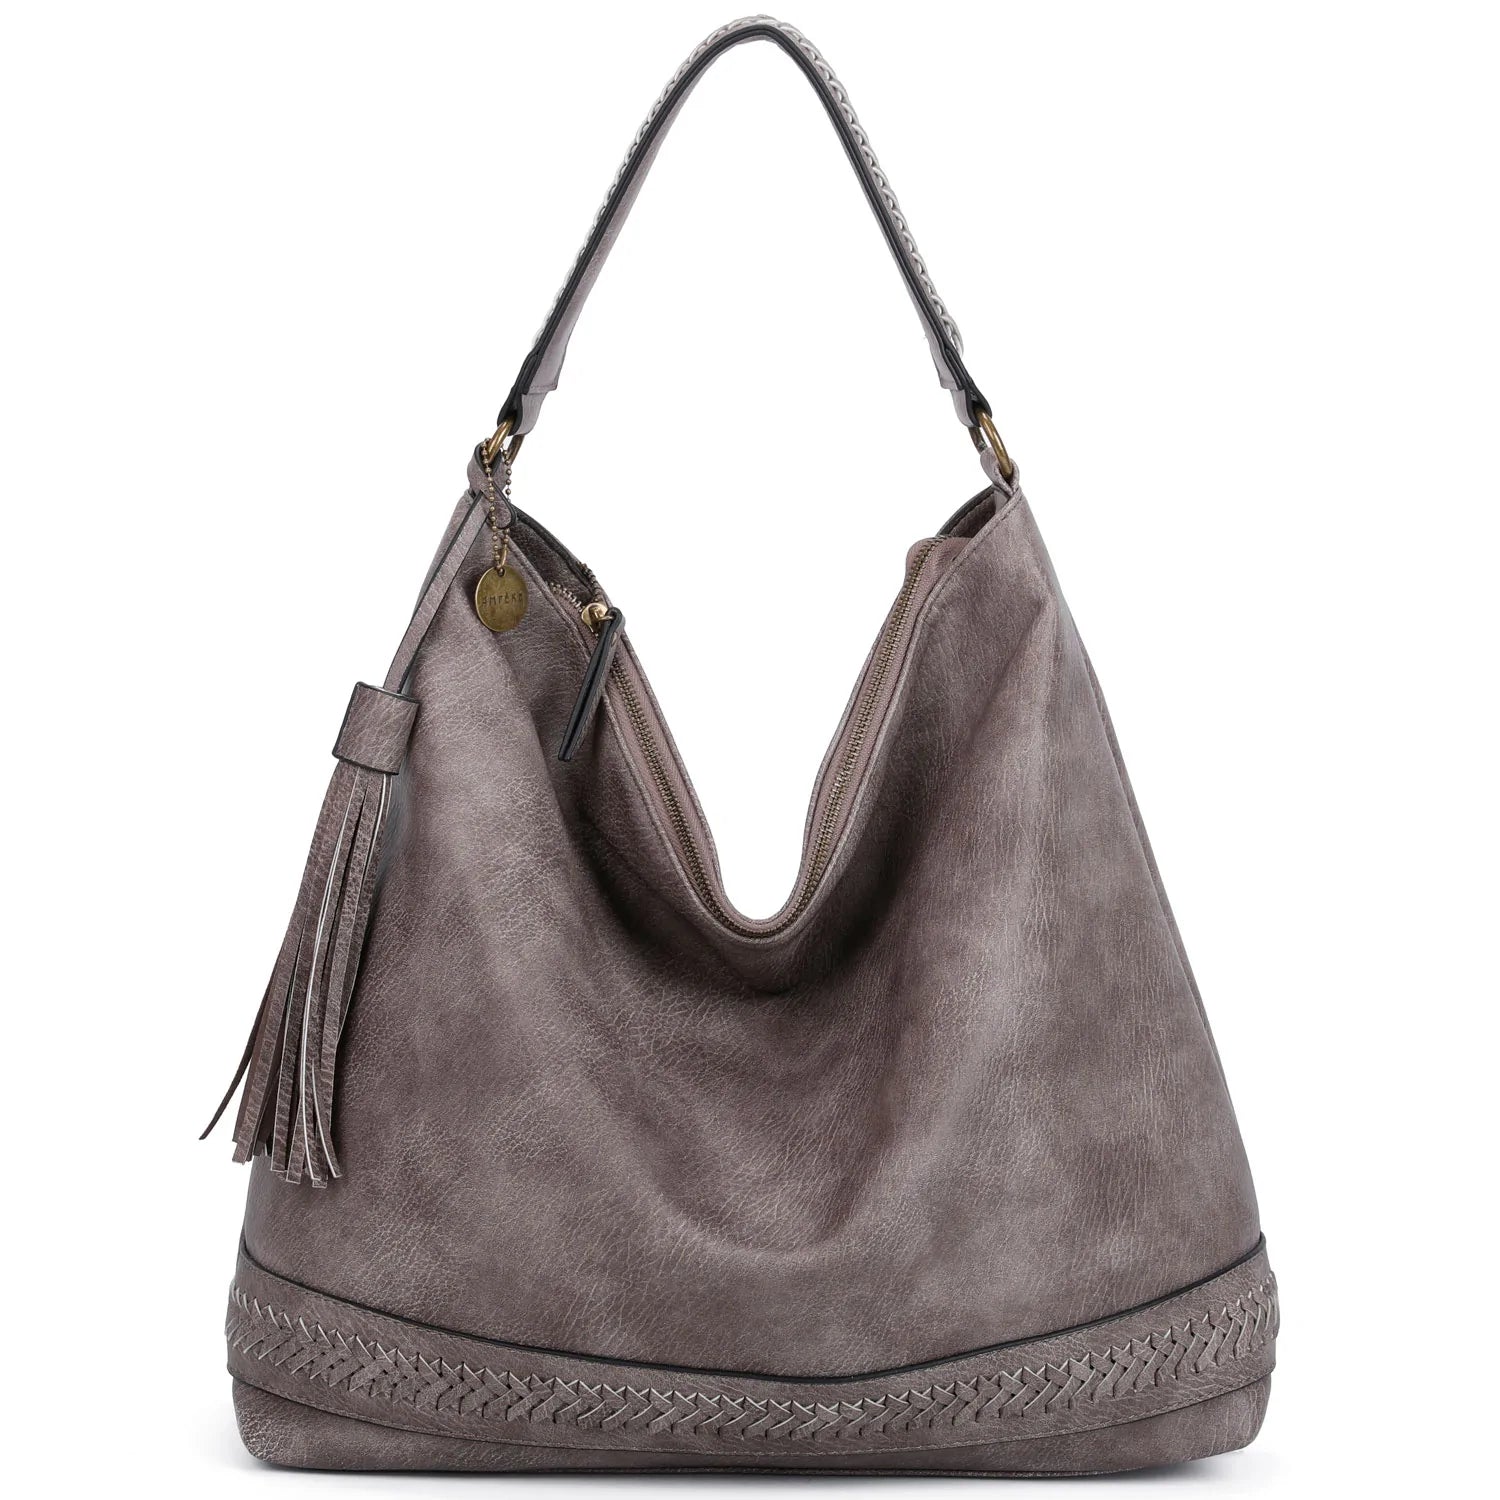 Aida Hobo - Stone Vegan Leather Handbag